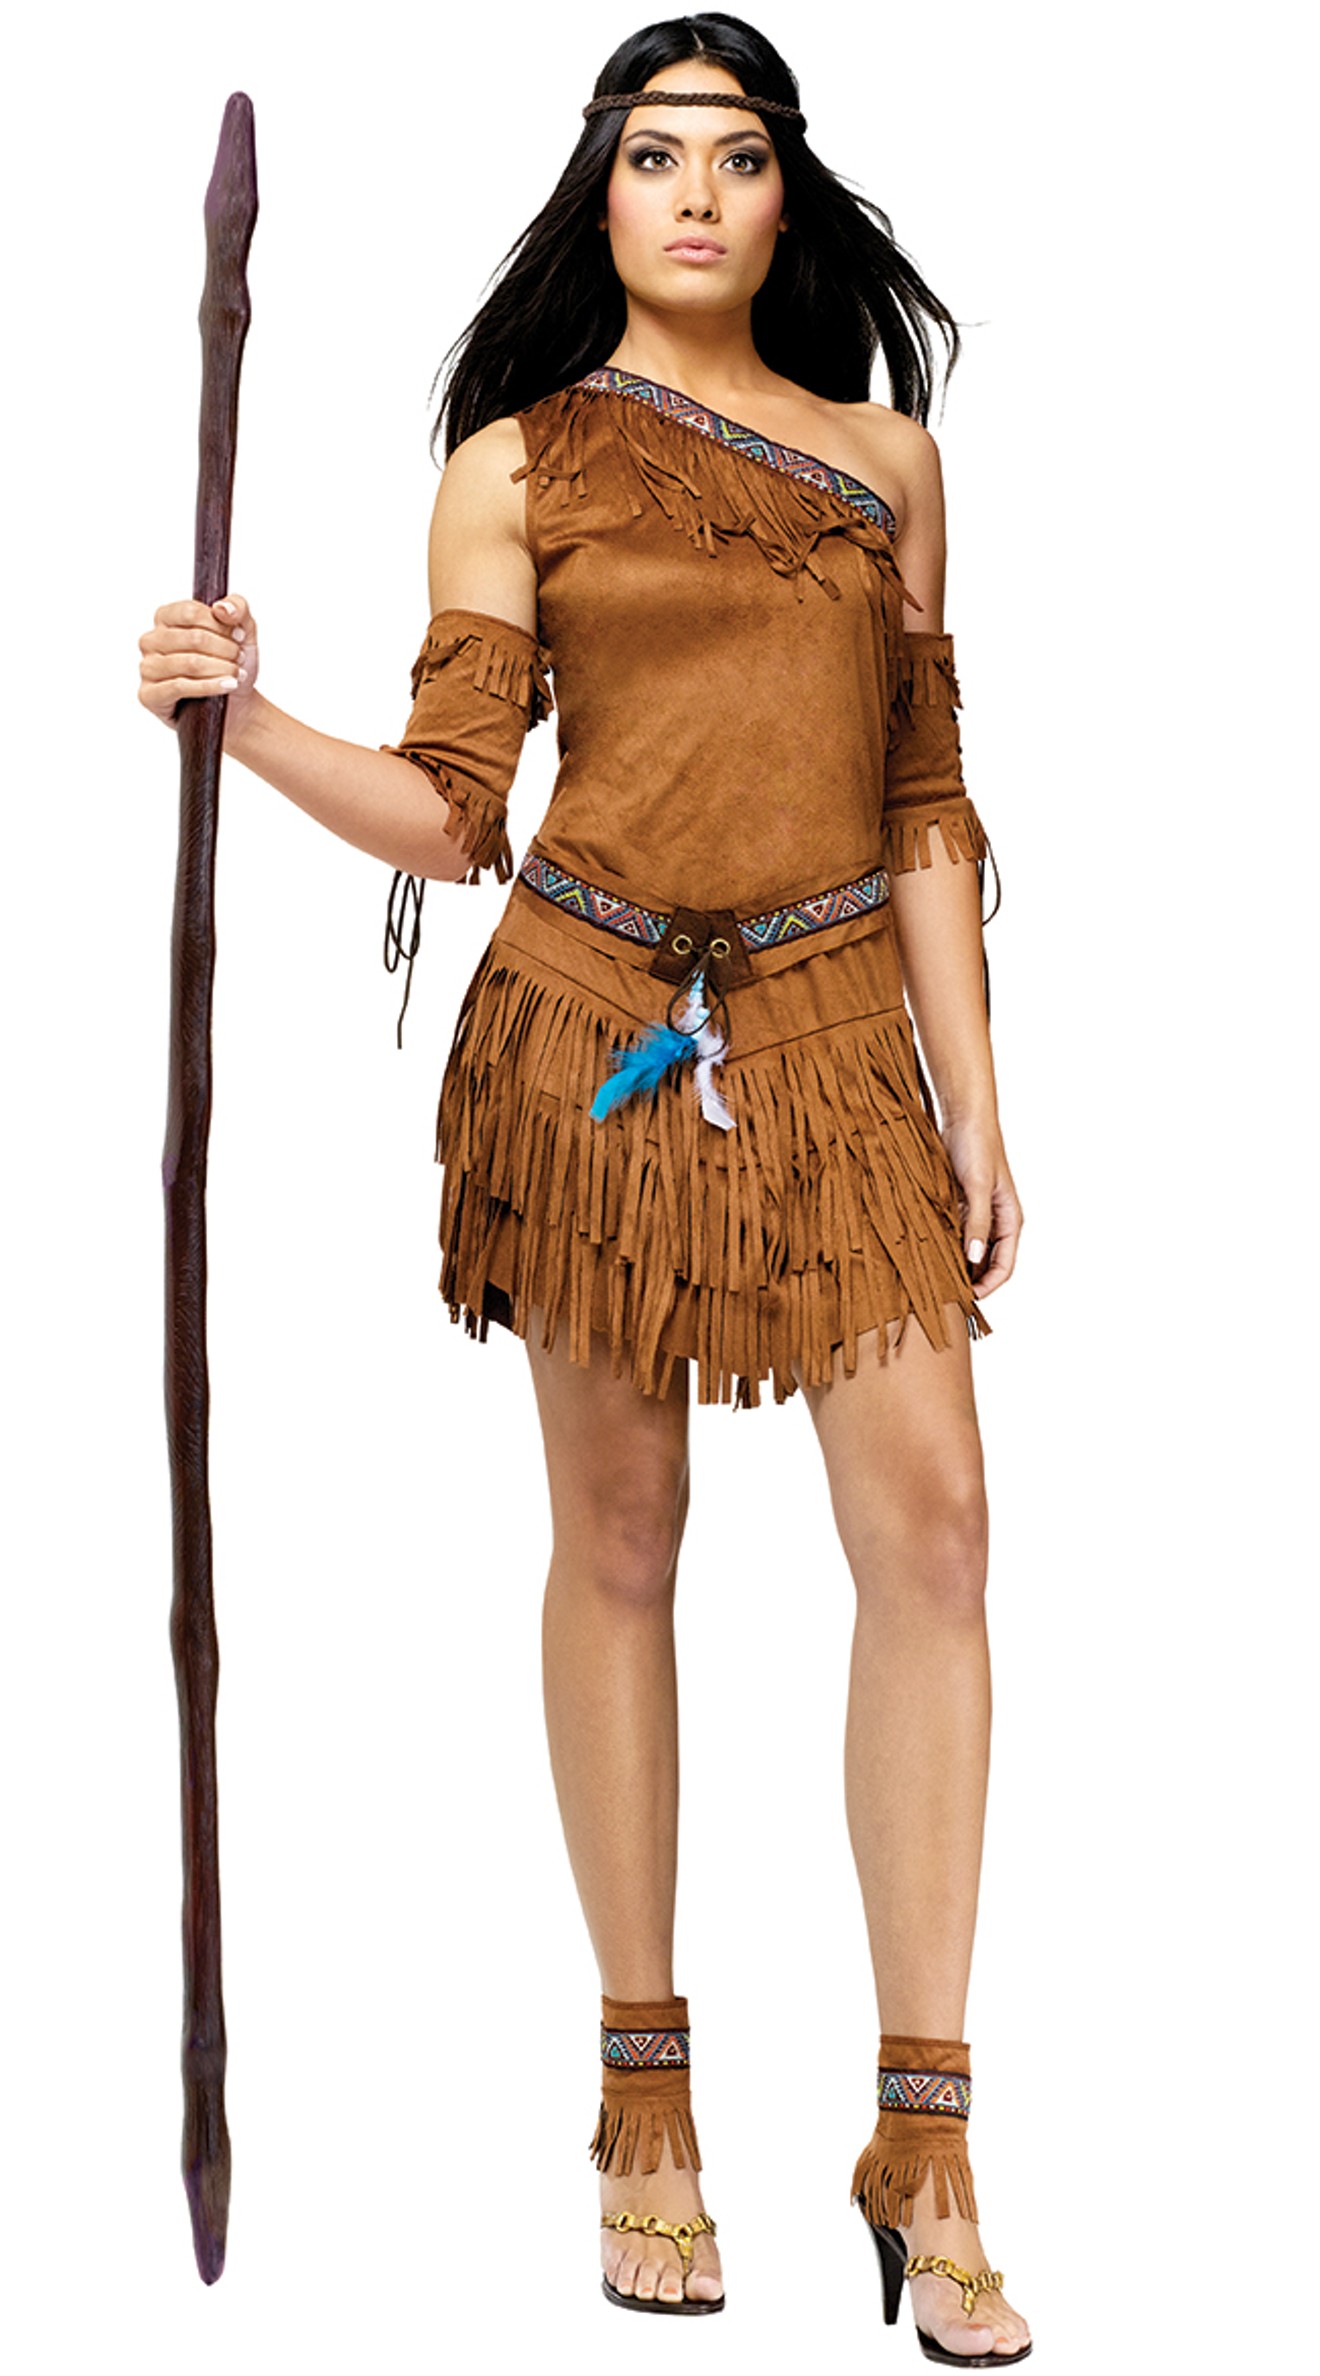 Native American costume from Yandy.com